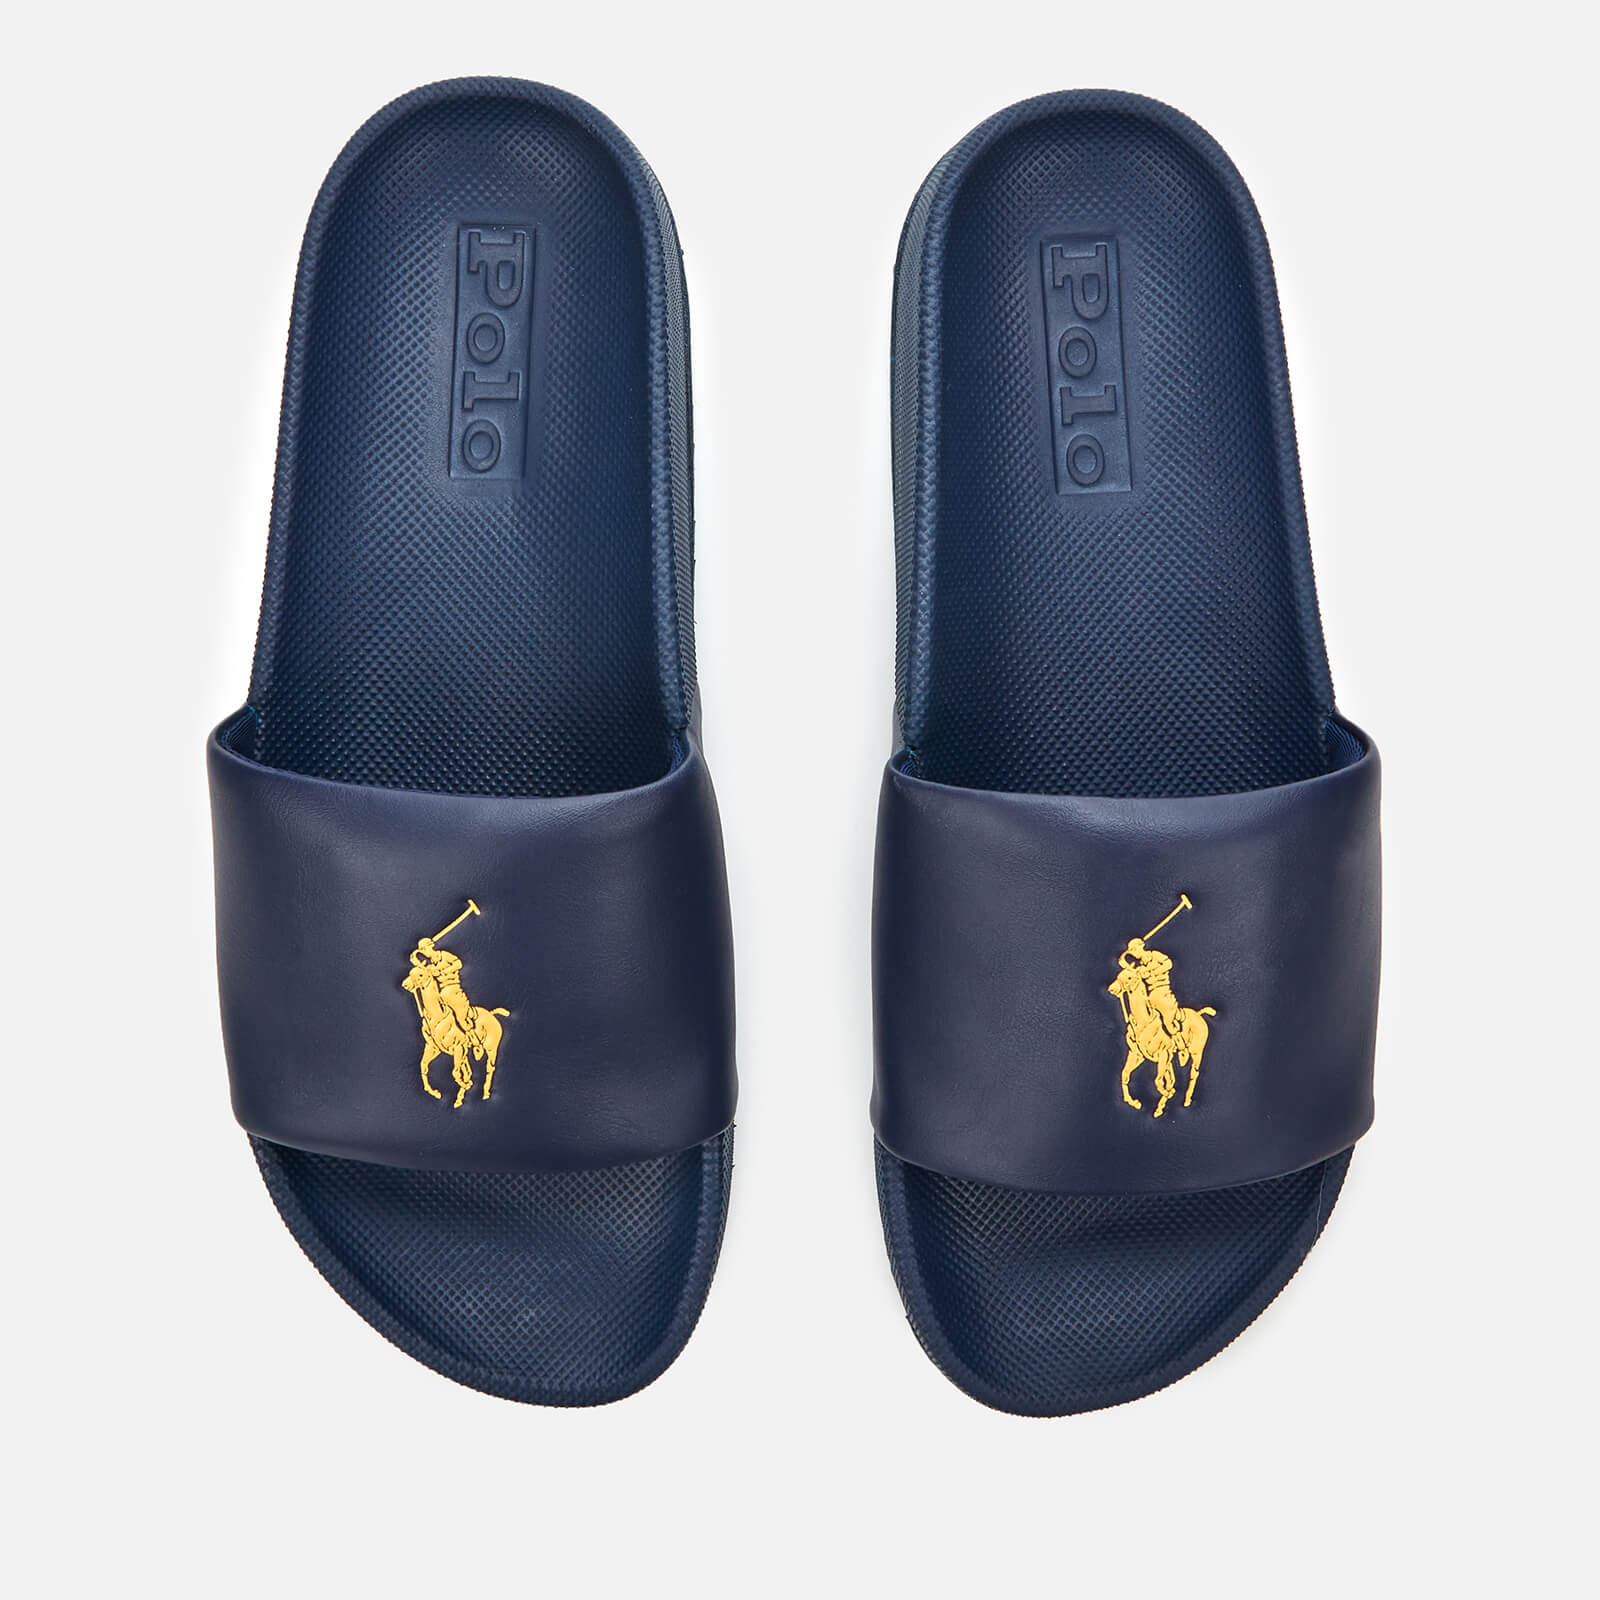 Polo Ralph Lauren Men's Cayson Slide Sandals - Newport Navy/Gold - UK 10